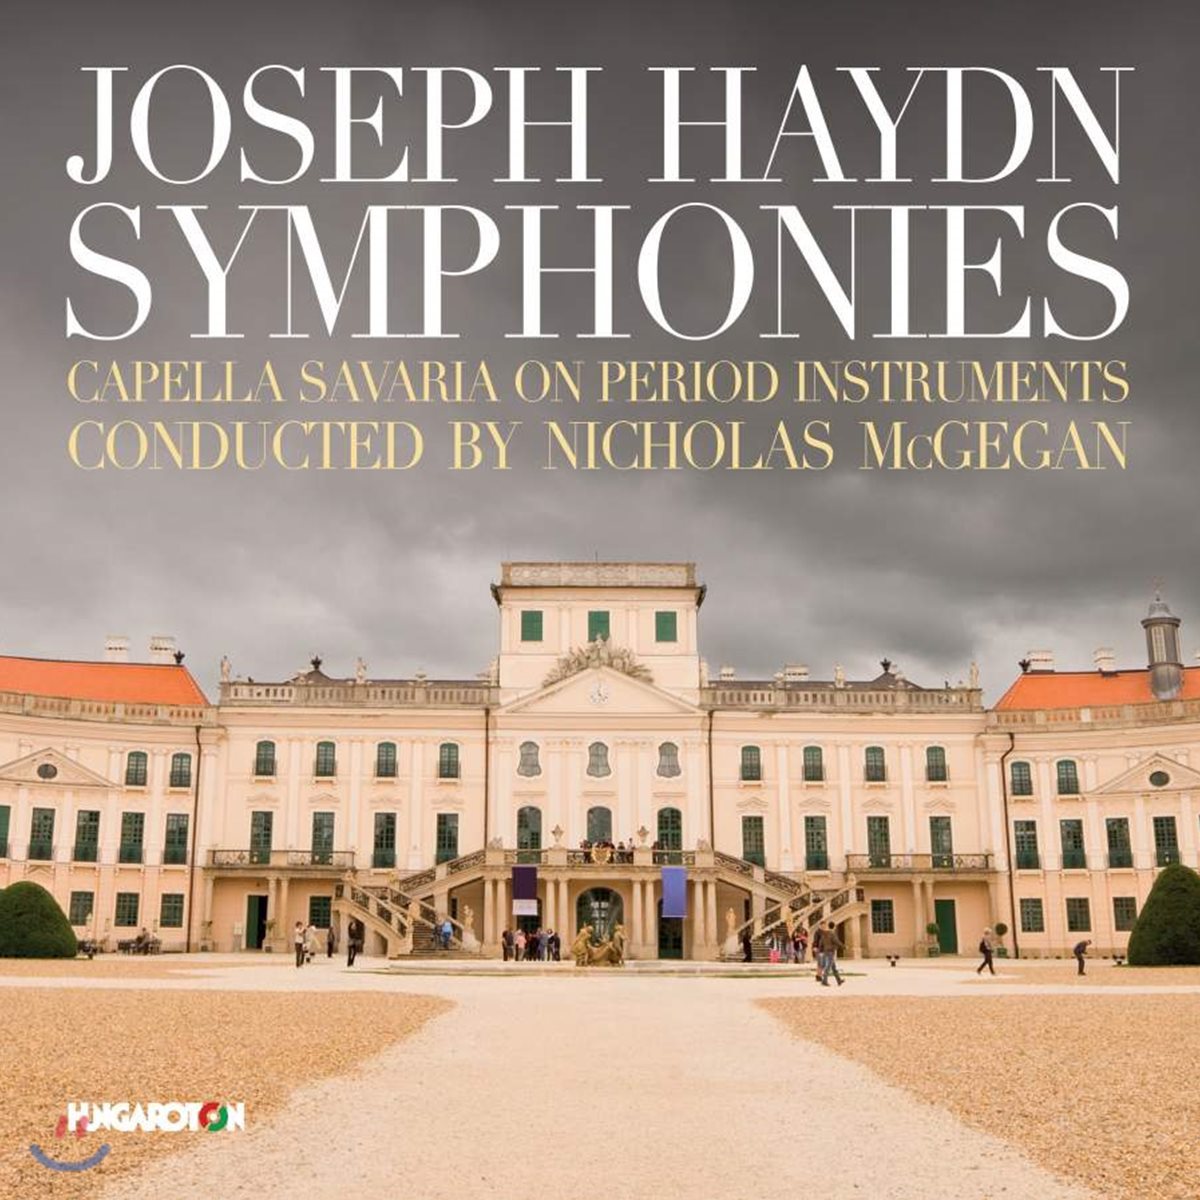 Nicholas McGegan 하이든: 교향곡 79, 80 & 81번 (Haydn: Symphonies Nos. 79, 80 & 81) 